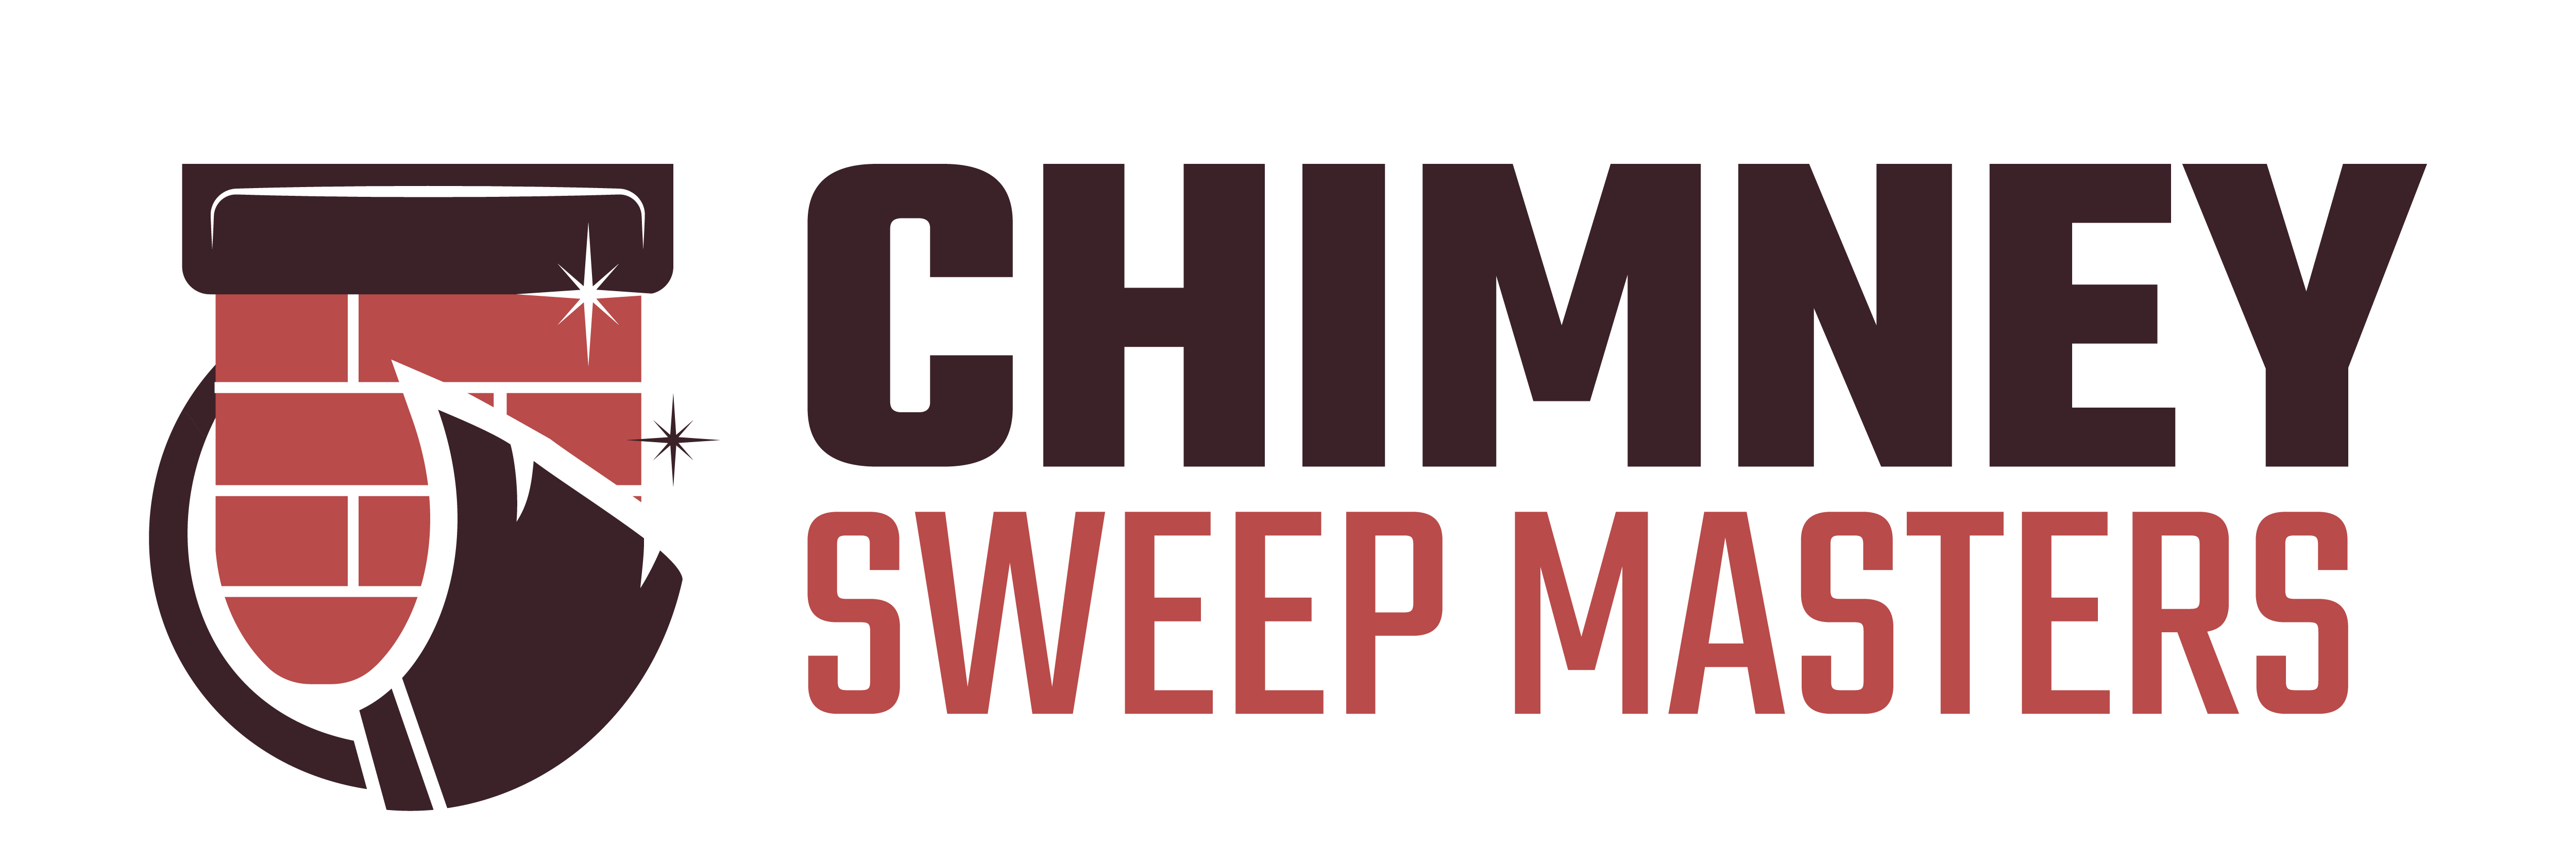 Chimney Sweep Masters Colton Logo